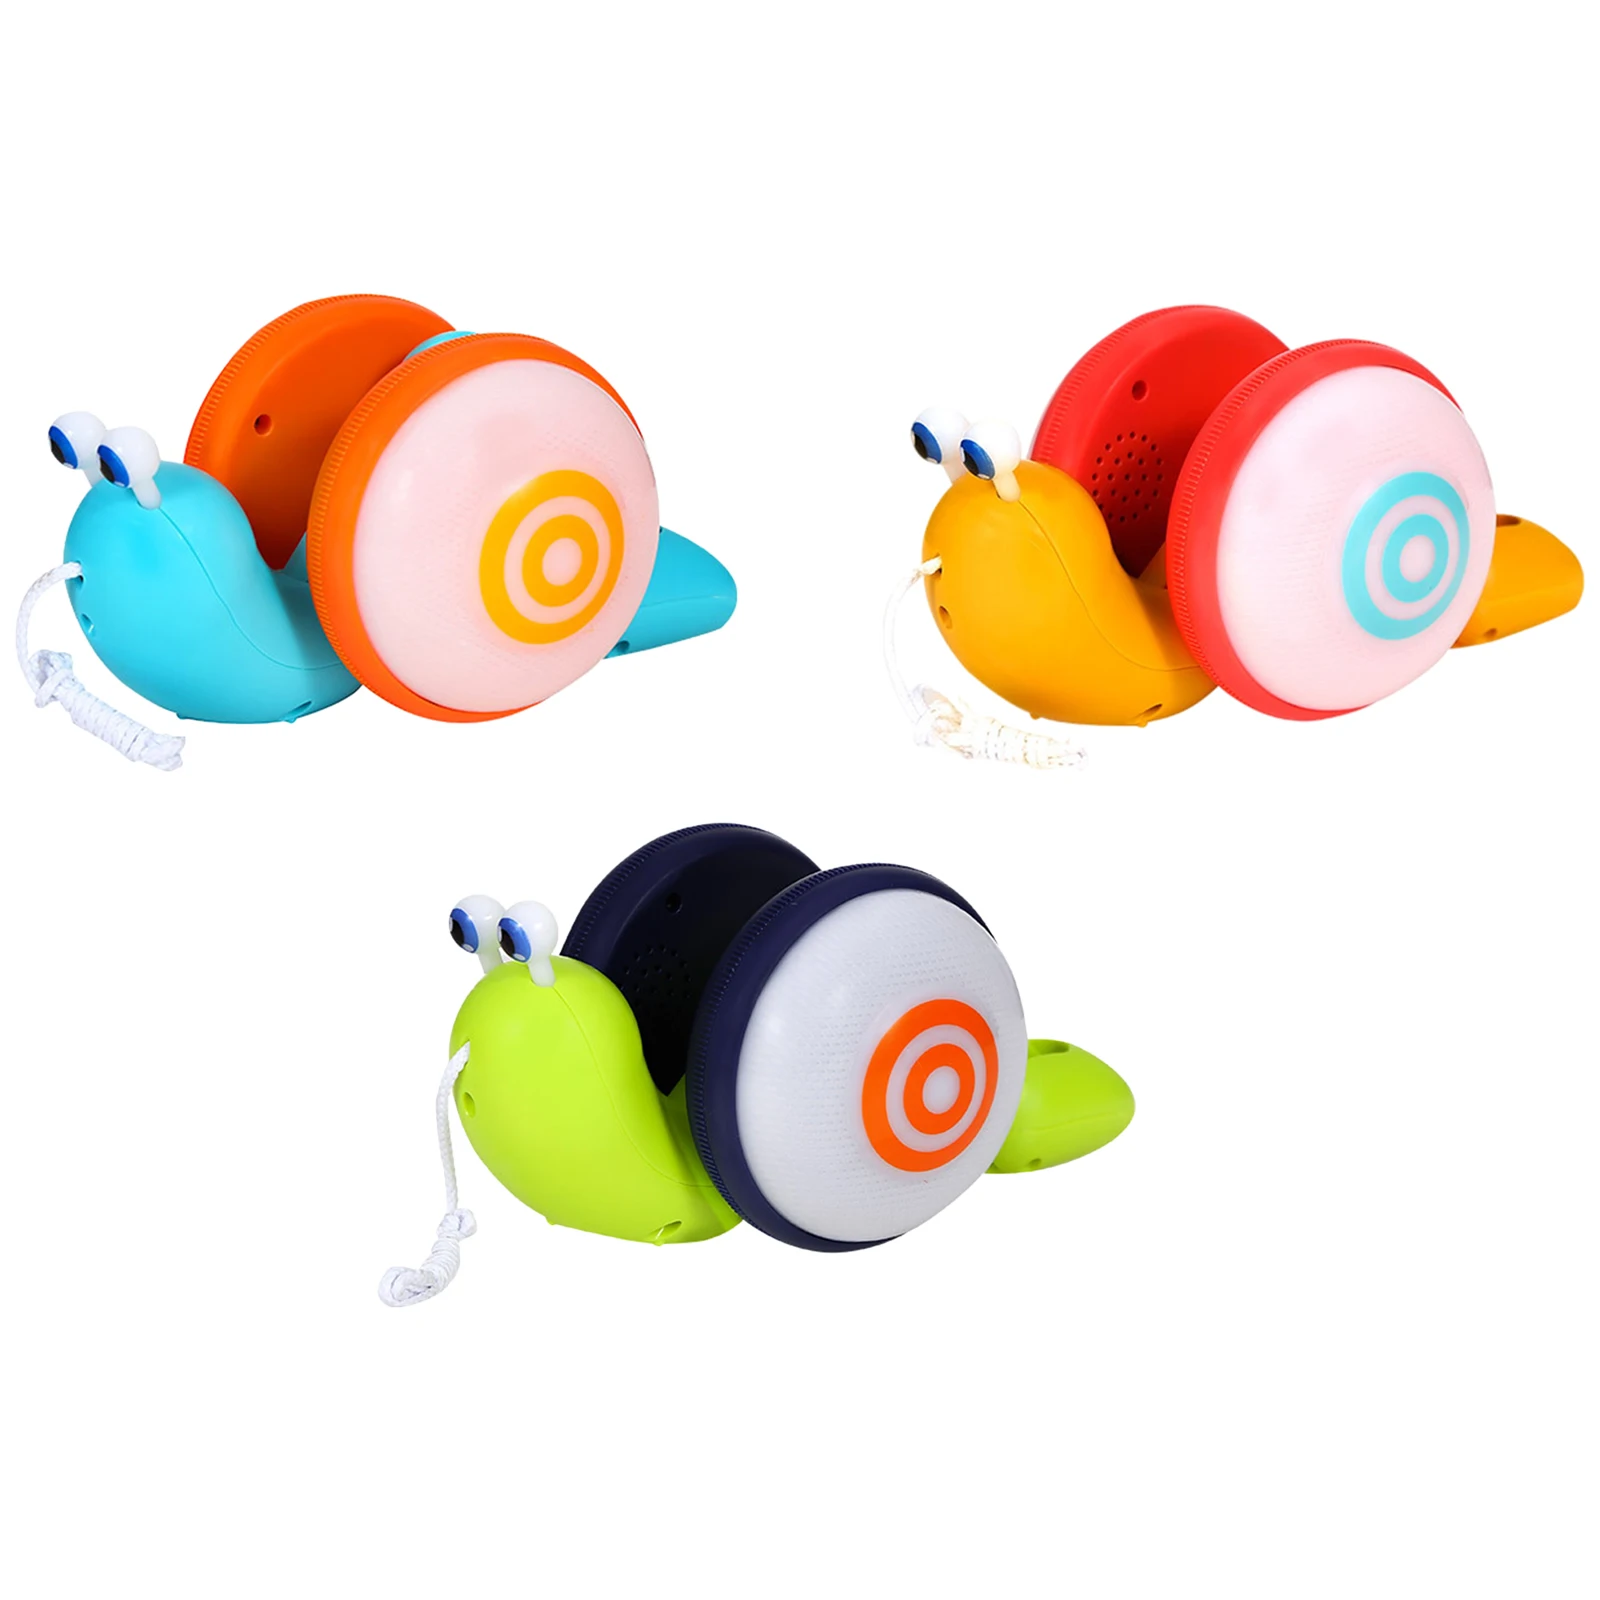 

Baby Snail-shaped Pull-Along Toys Learn Walk Tools] Lighting Music Push Pull Toys Walker Motor Skills Toy